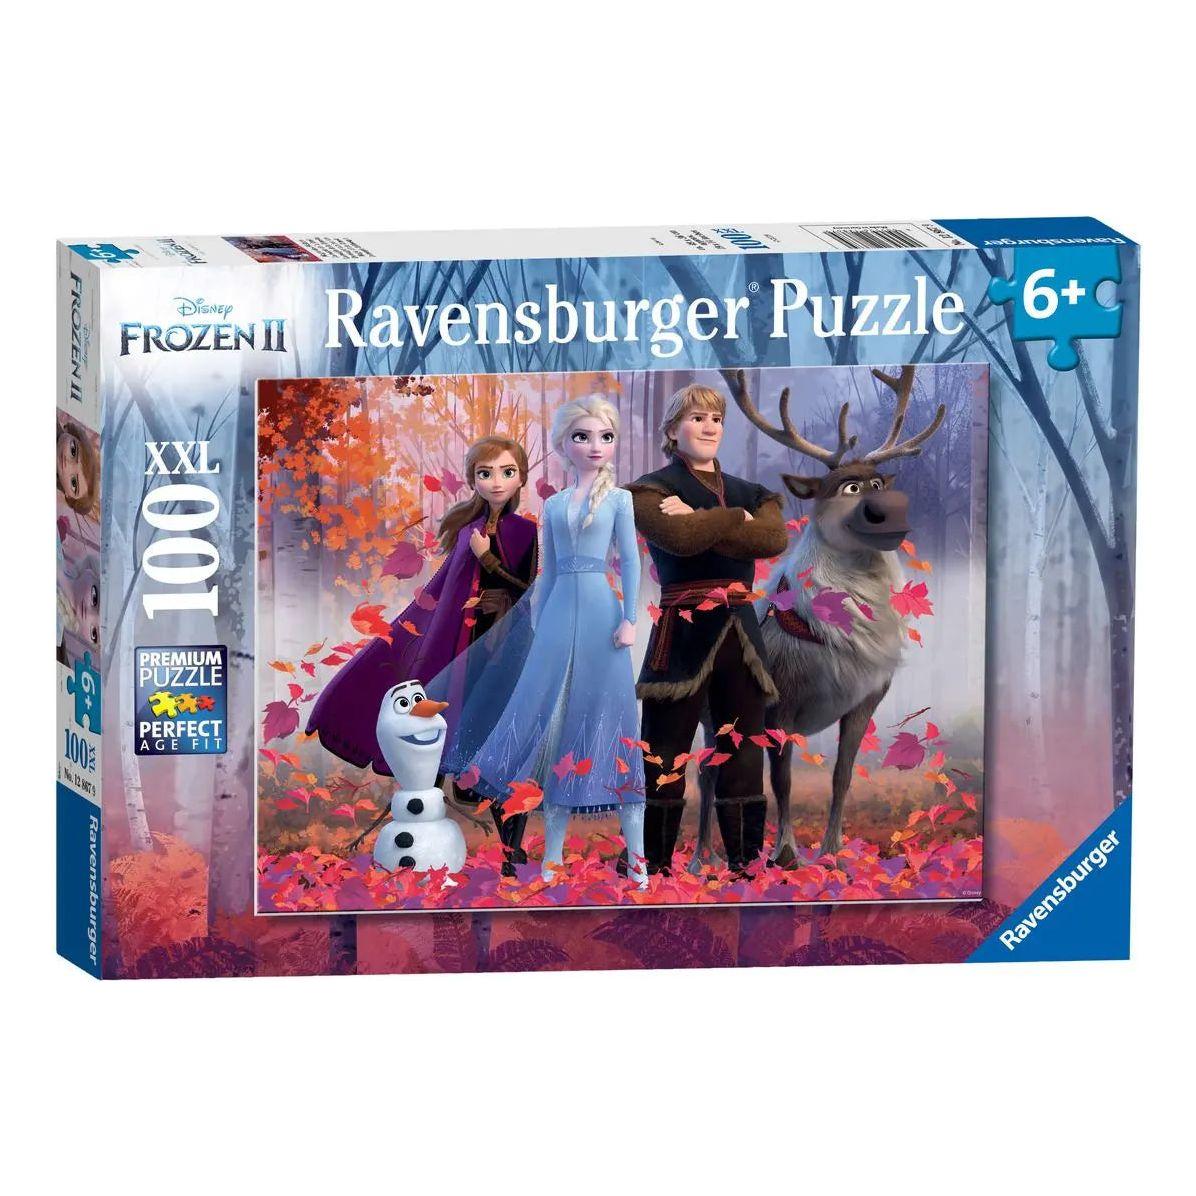 Ravensburger Barbie, XXL 100 piece Jigsaw Puzzle